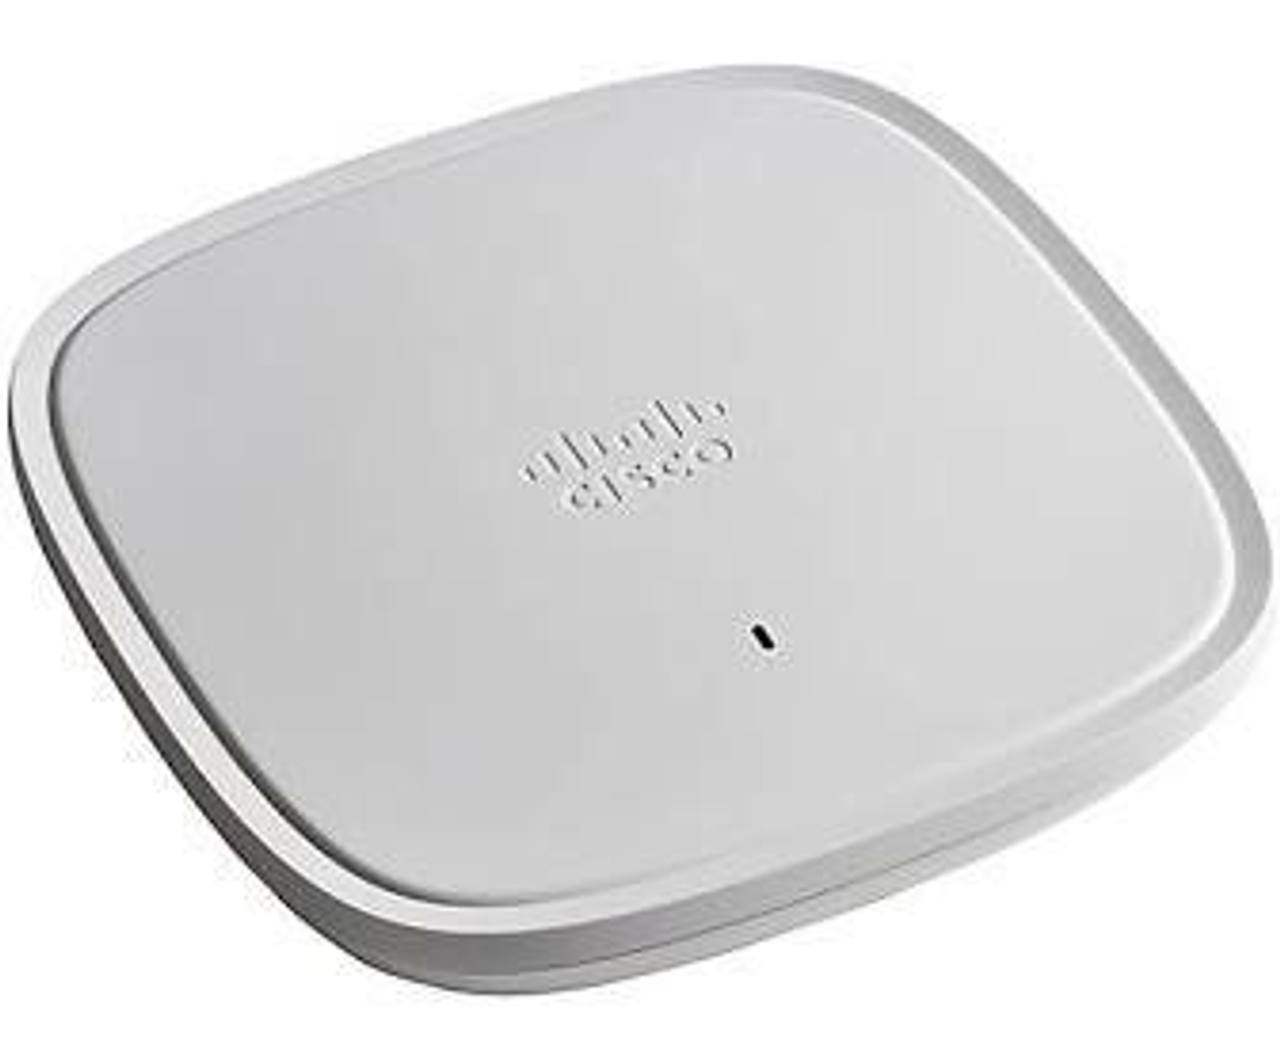 Cisco 9130AXI - Wireless access point - C9130AXI-